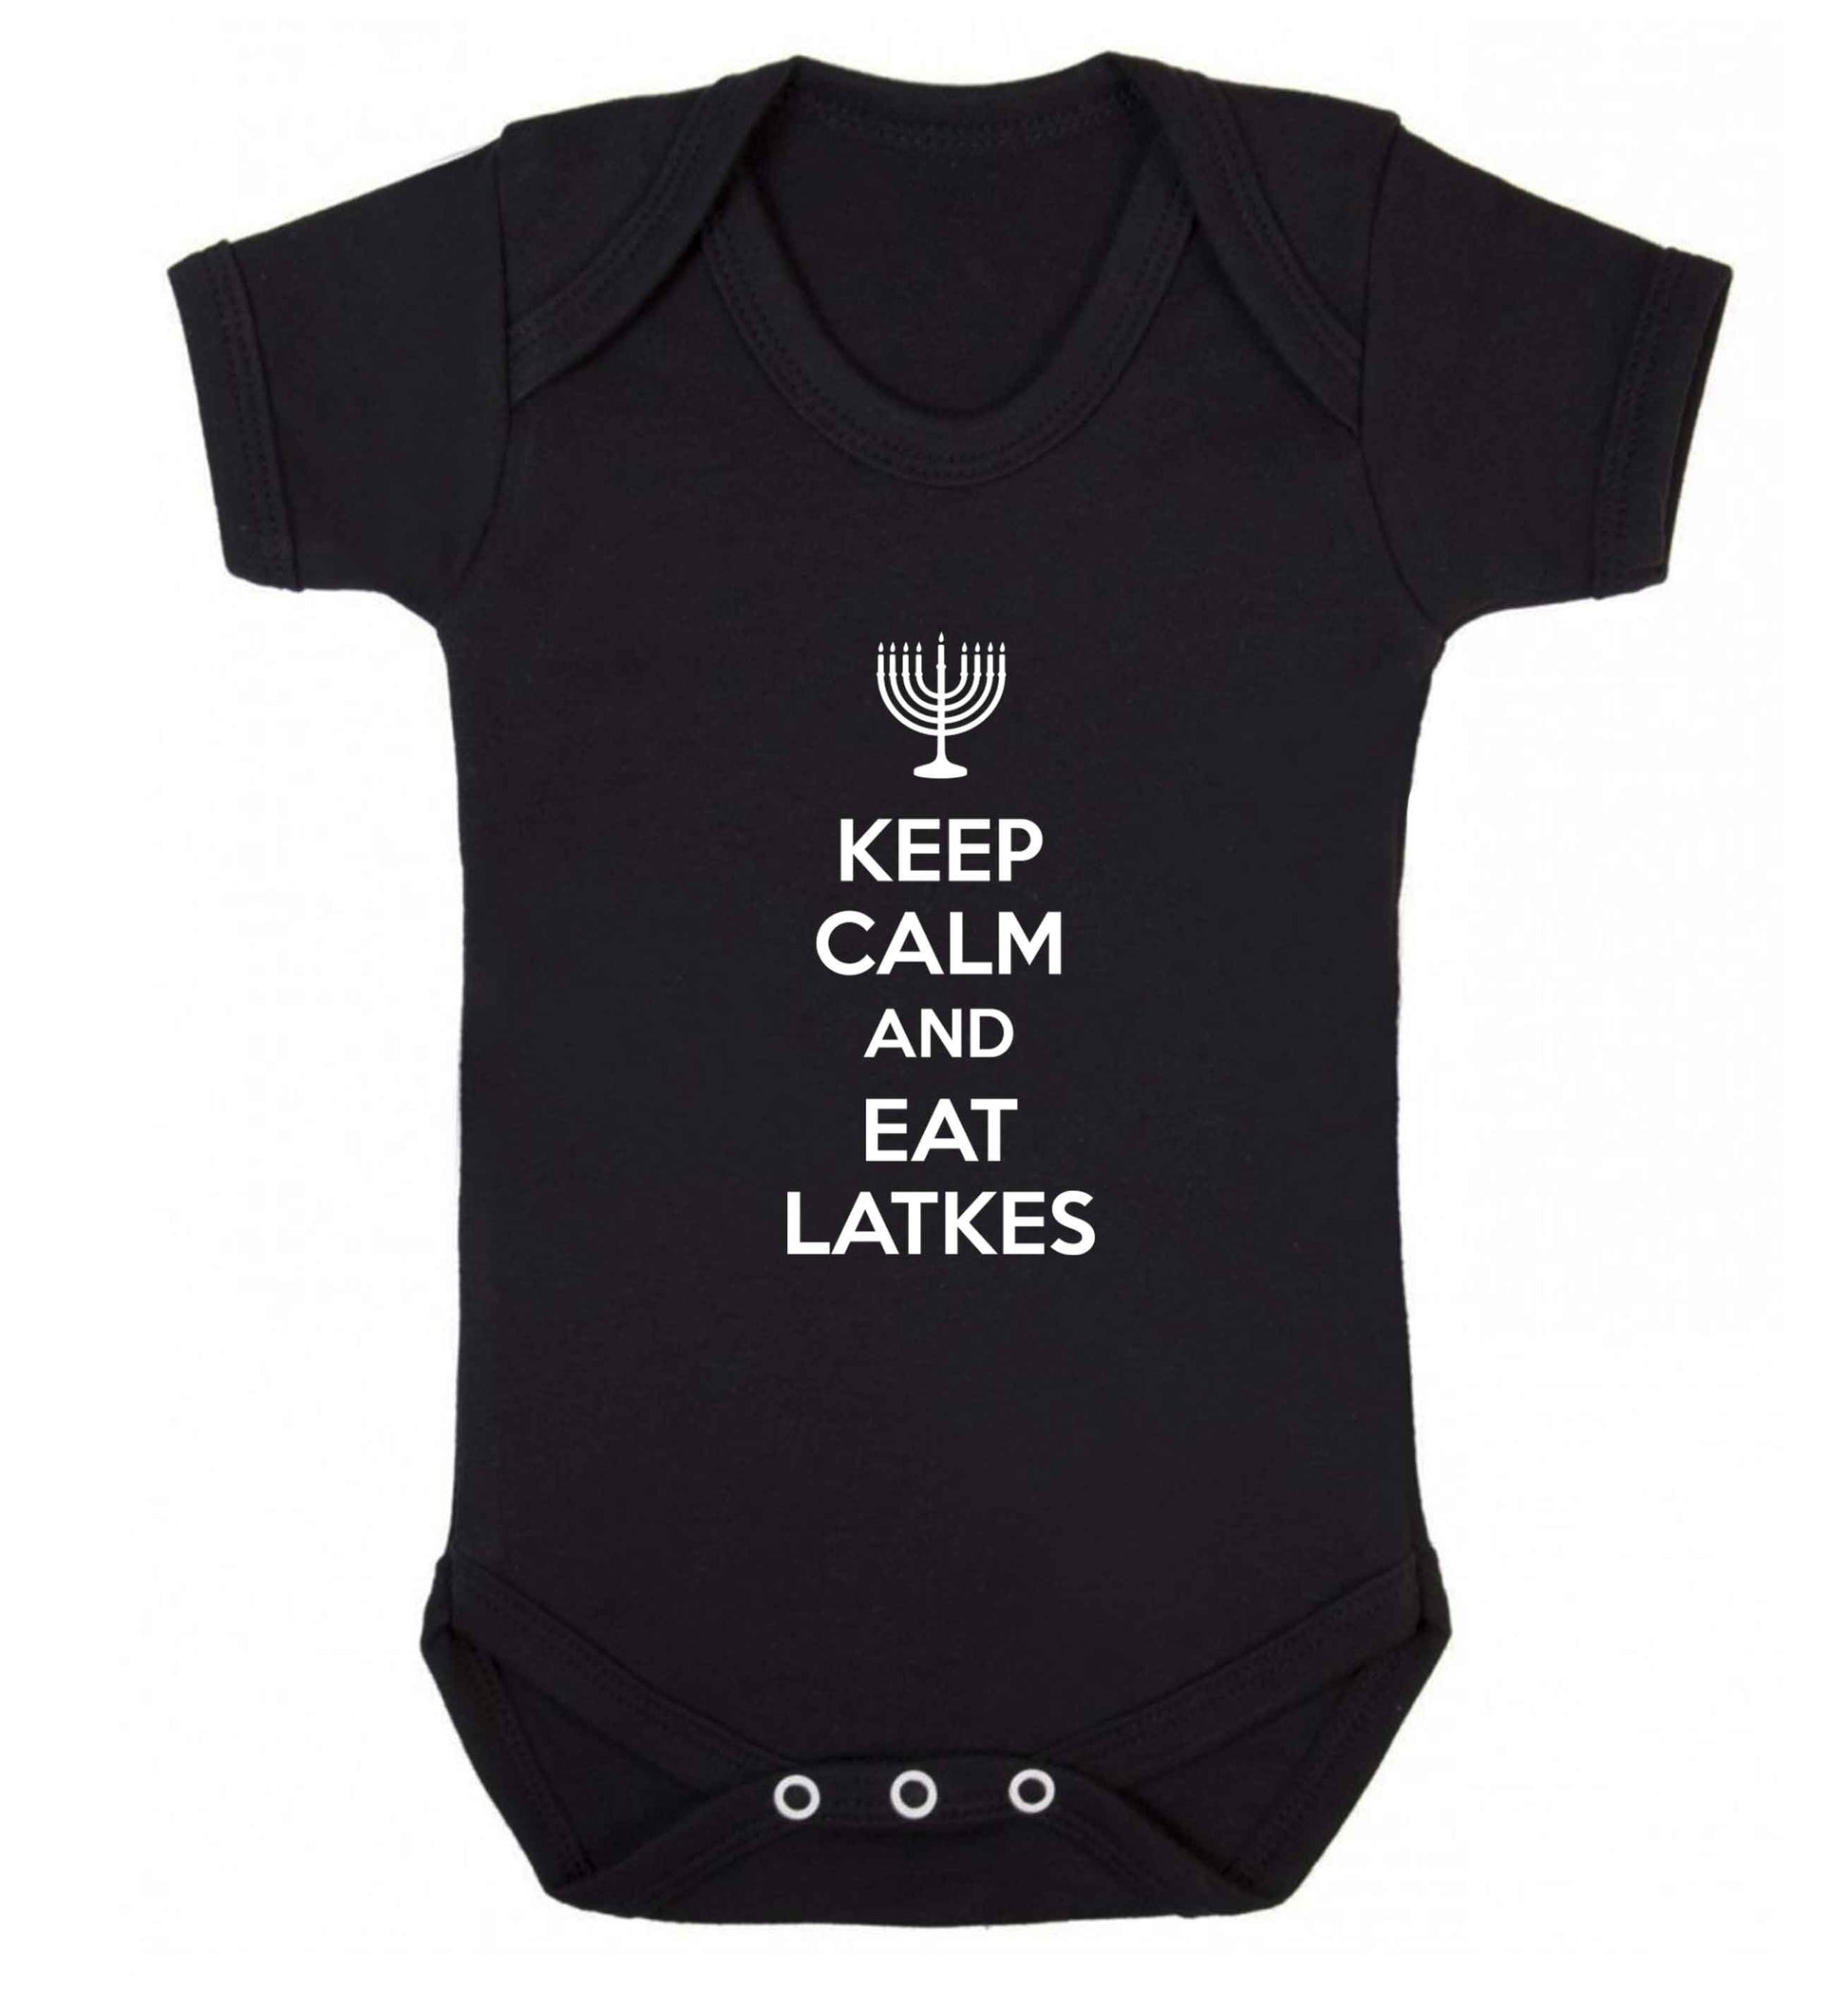 Keep calm and eat latkes baby vest black 18-24 months